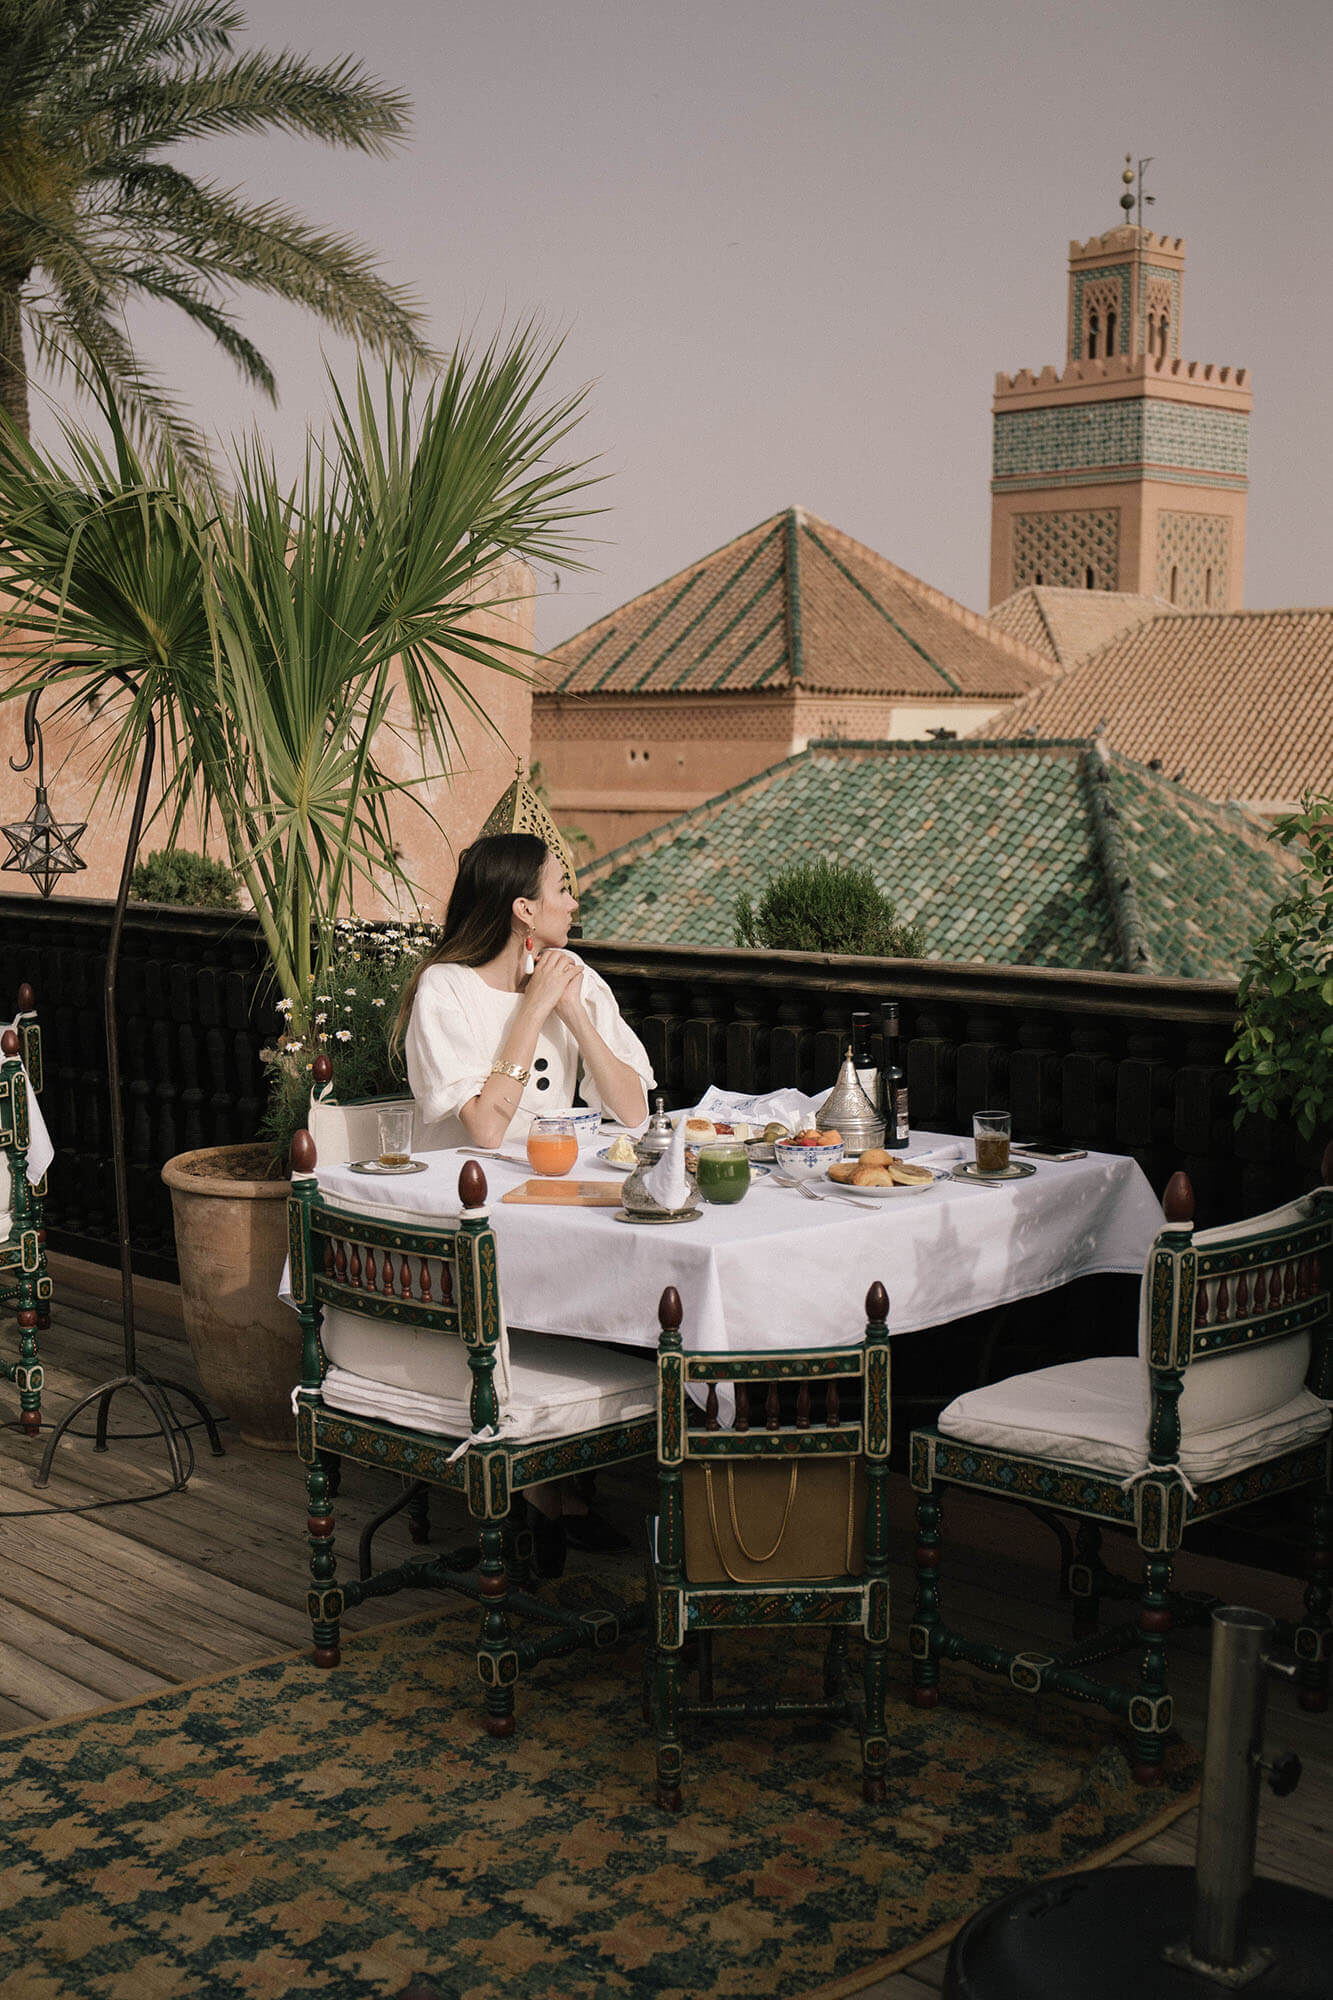 breakfast-la-sultana-restaurant-marrakech-morocco-traditional-food-11